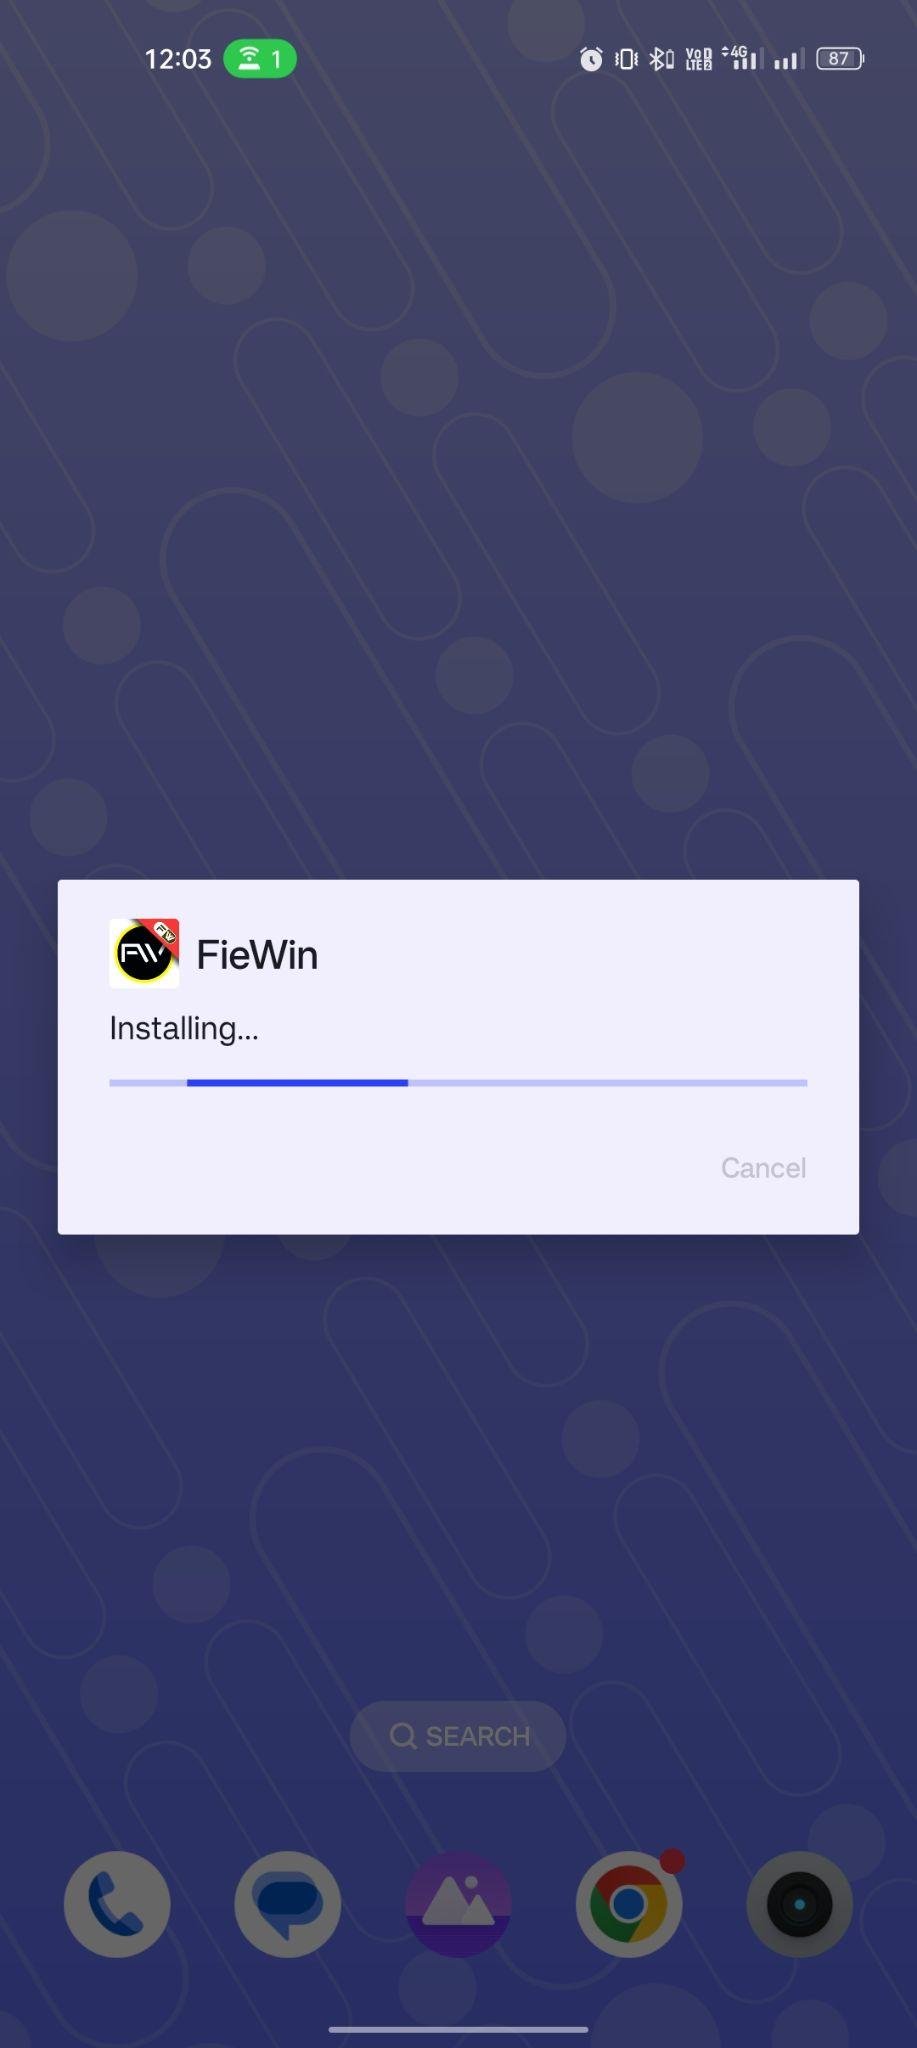 FieWin apk installing